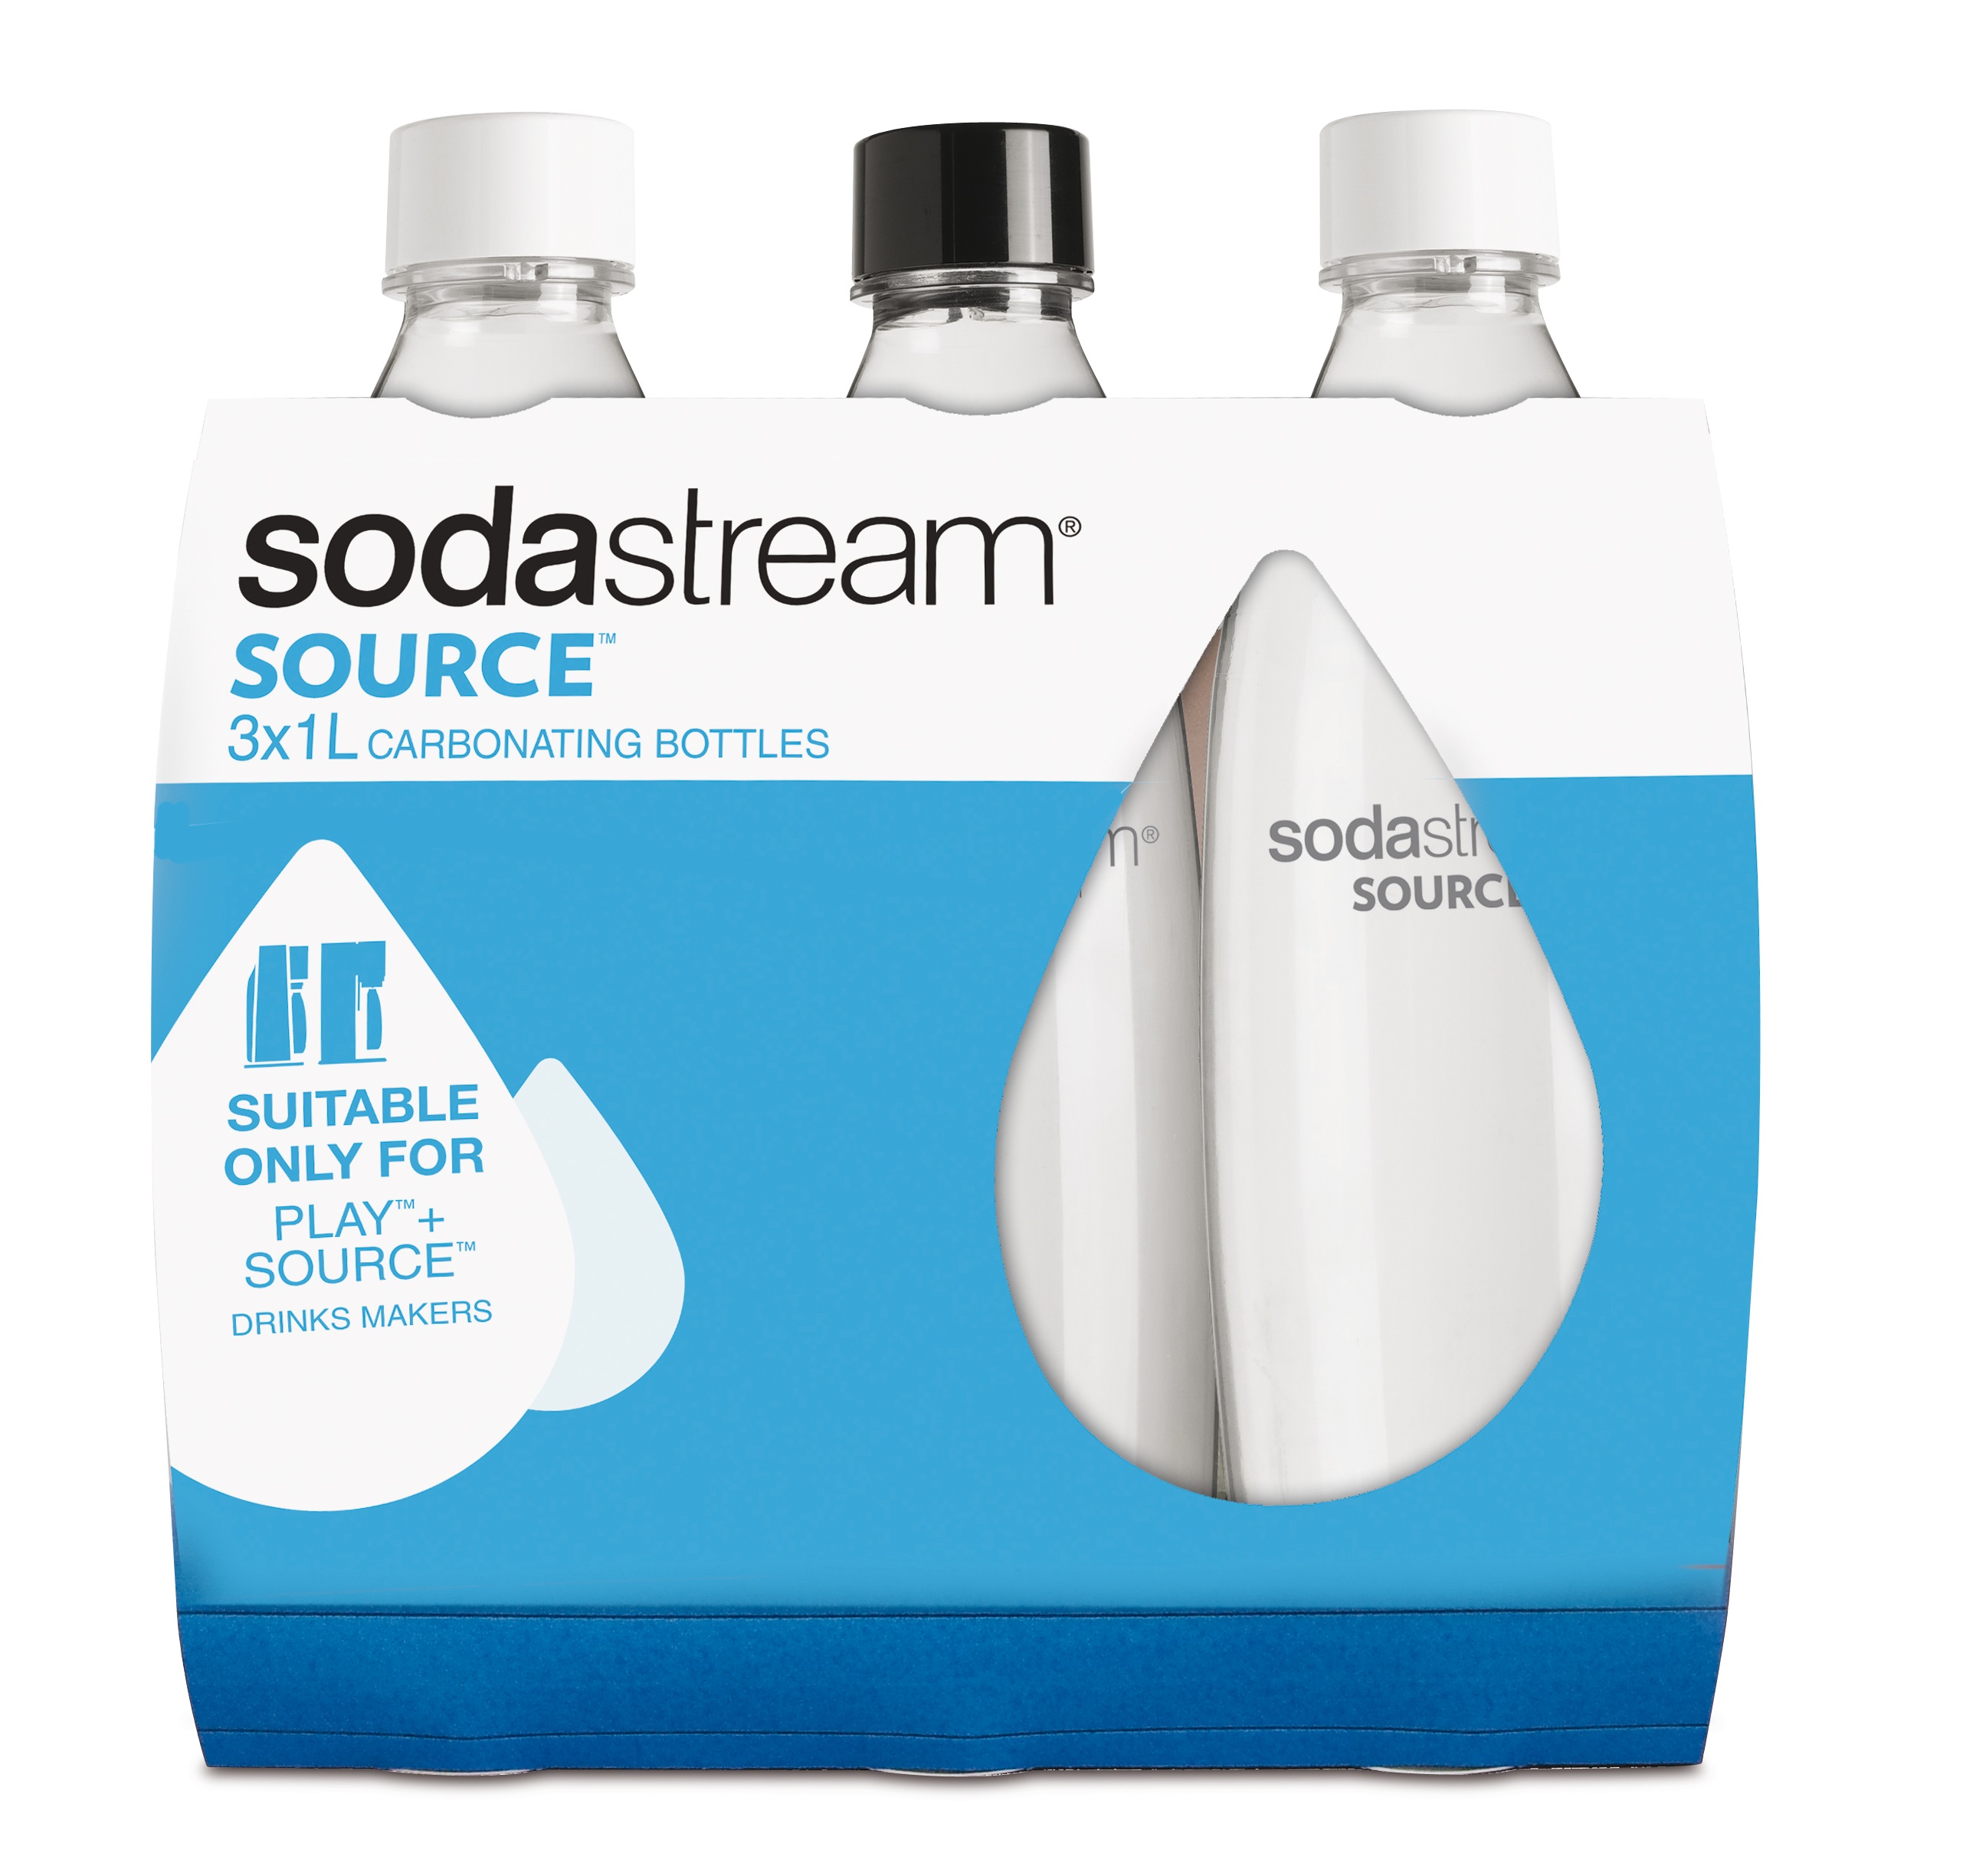 https://www.bruno.it/media/catalog/product/_/p/_products_sodastream-bottiglia-fuse-in-plastica-tripack-bottiglie.jpeg